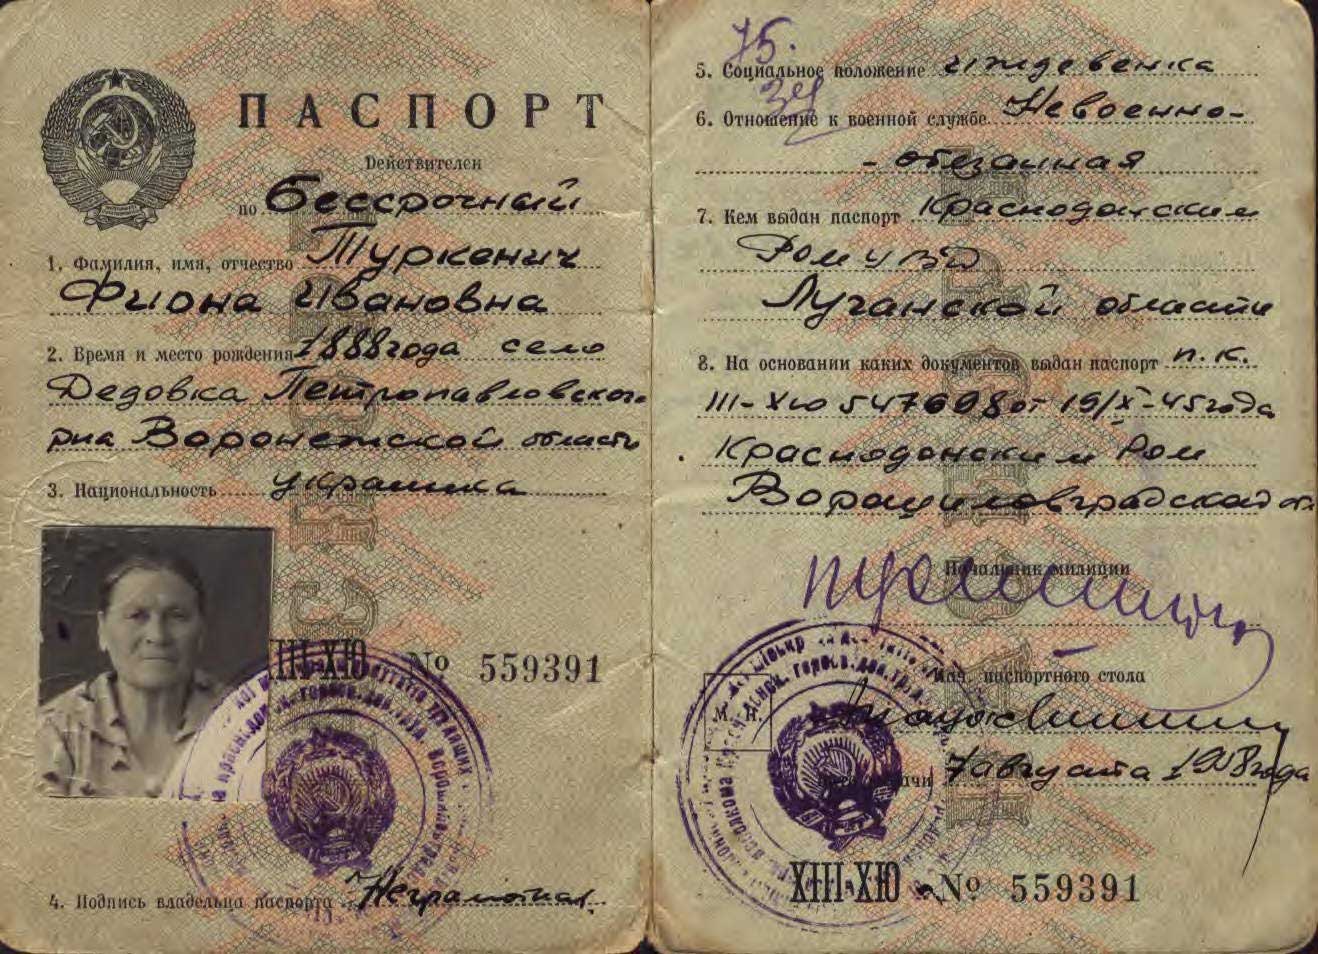 5 Графа в паспорте СССР